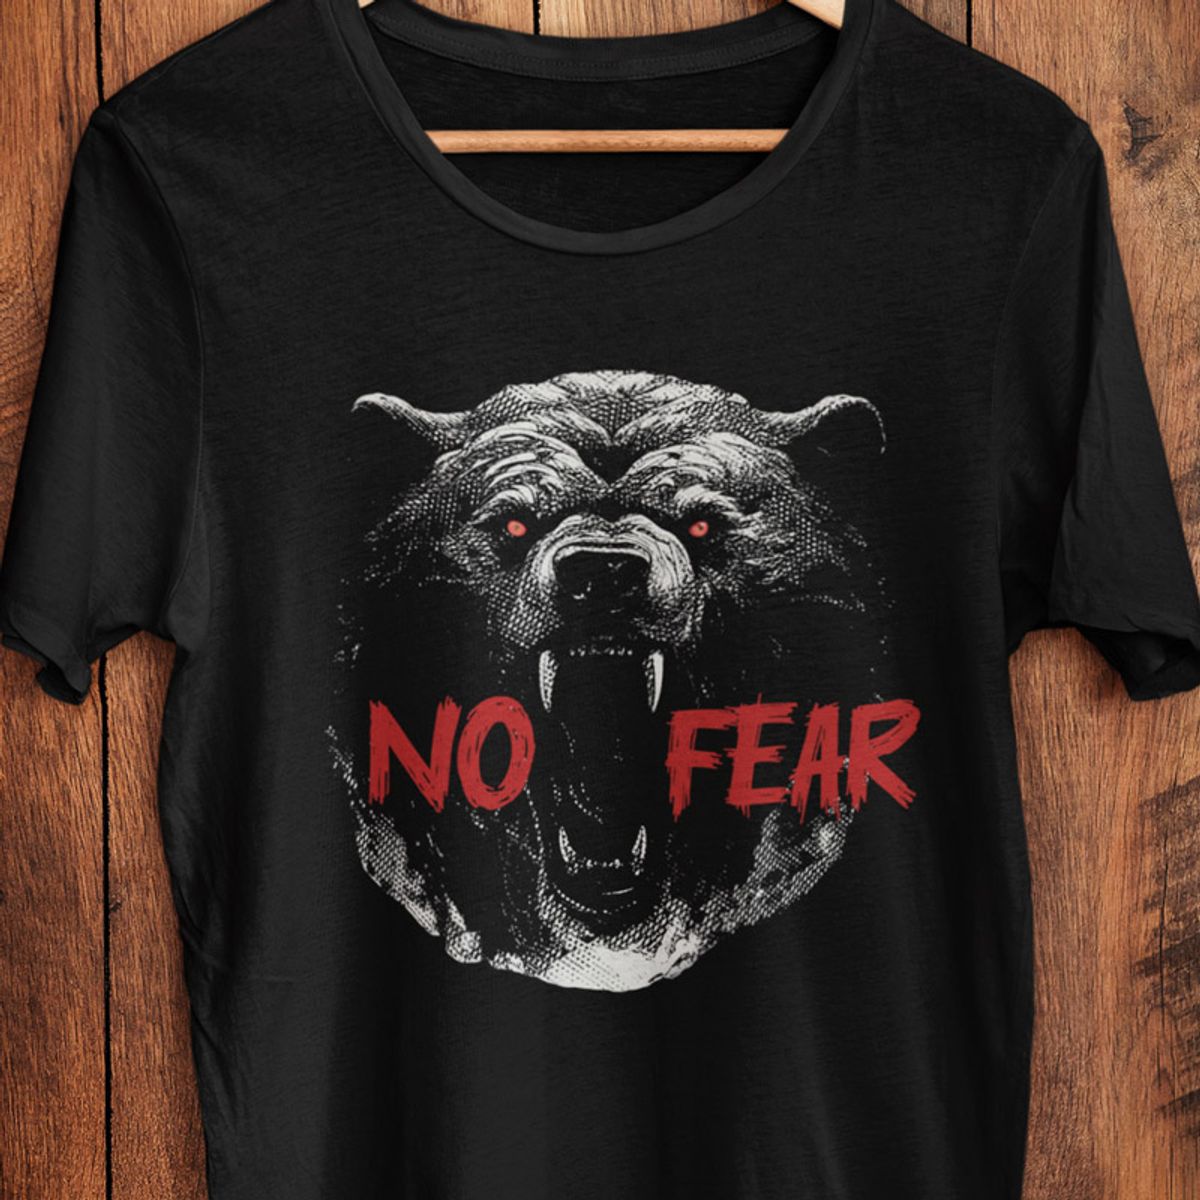 Nome do produto: Urso (No Fear)